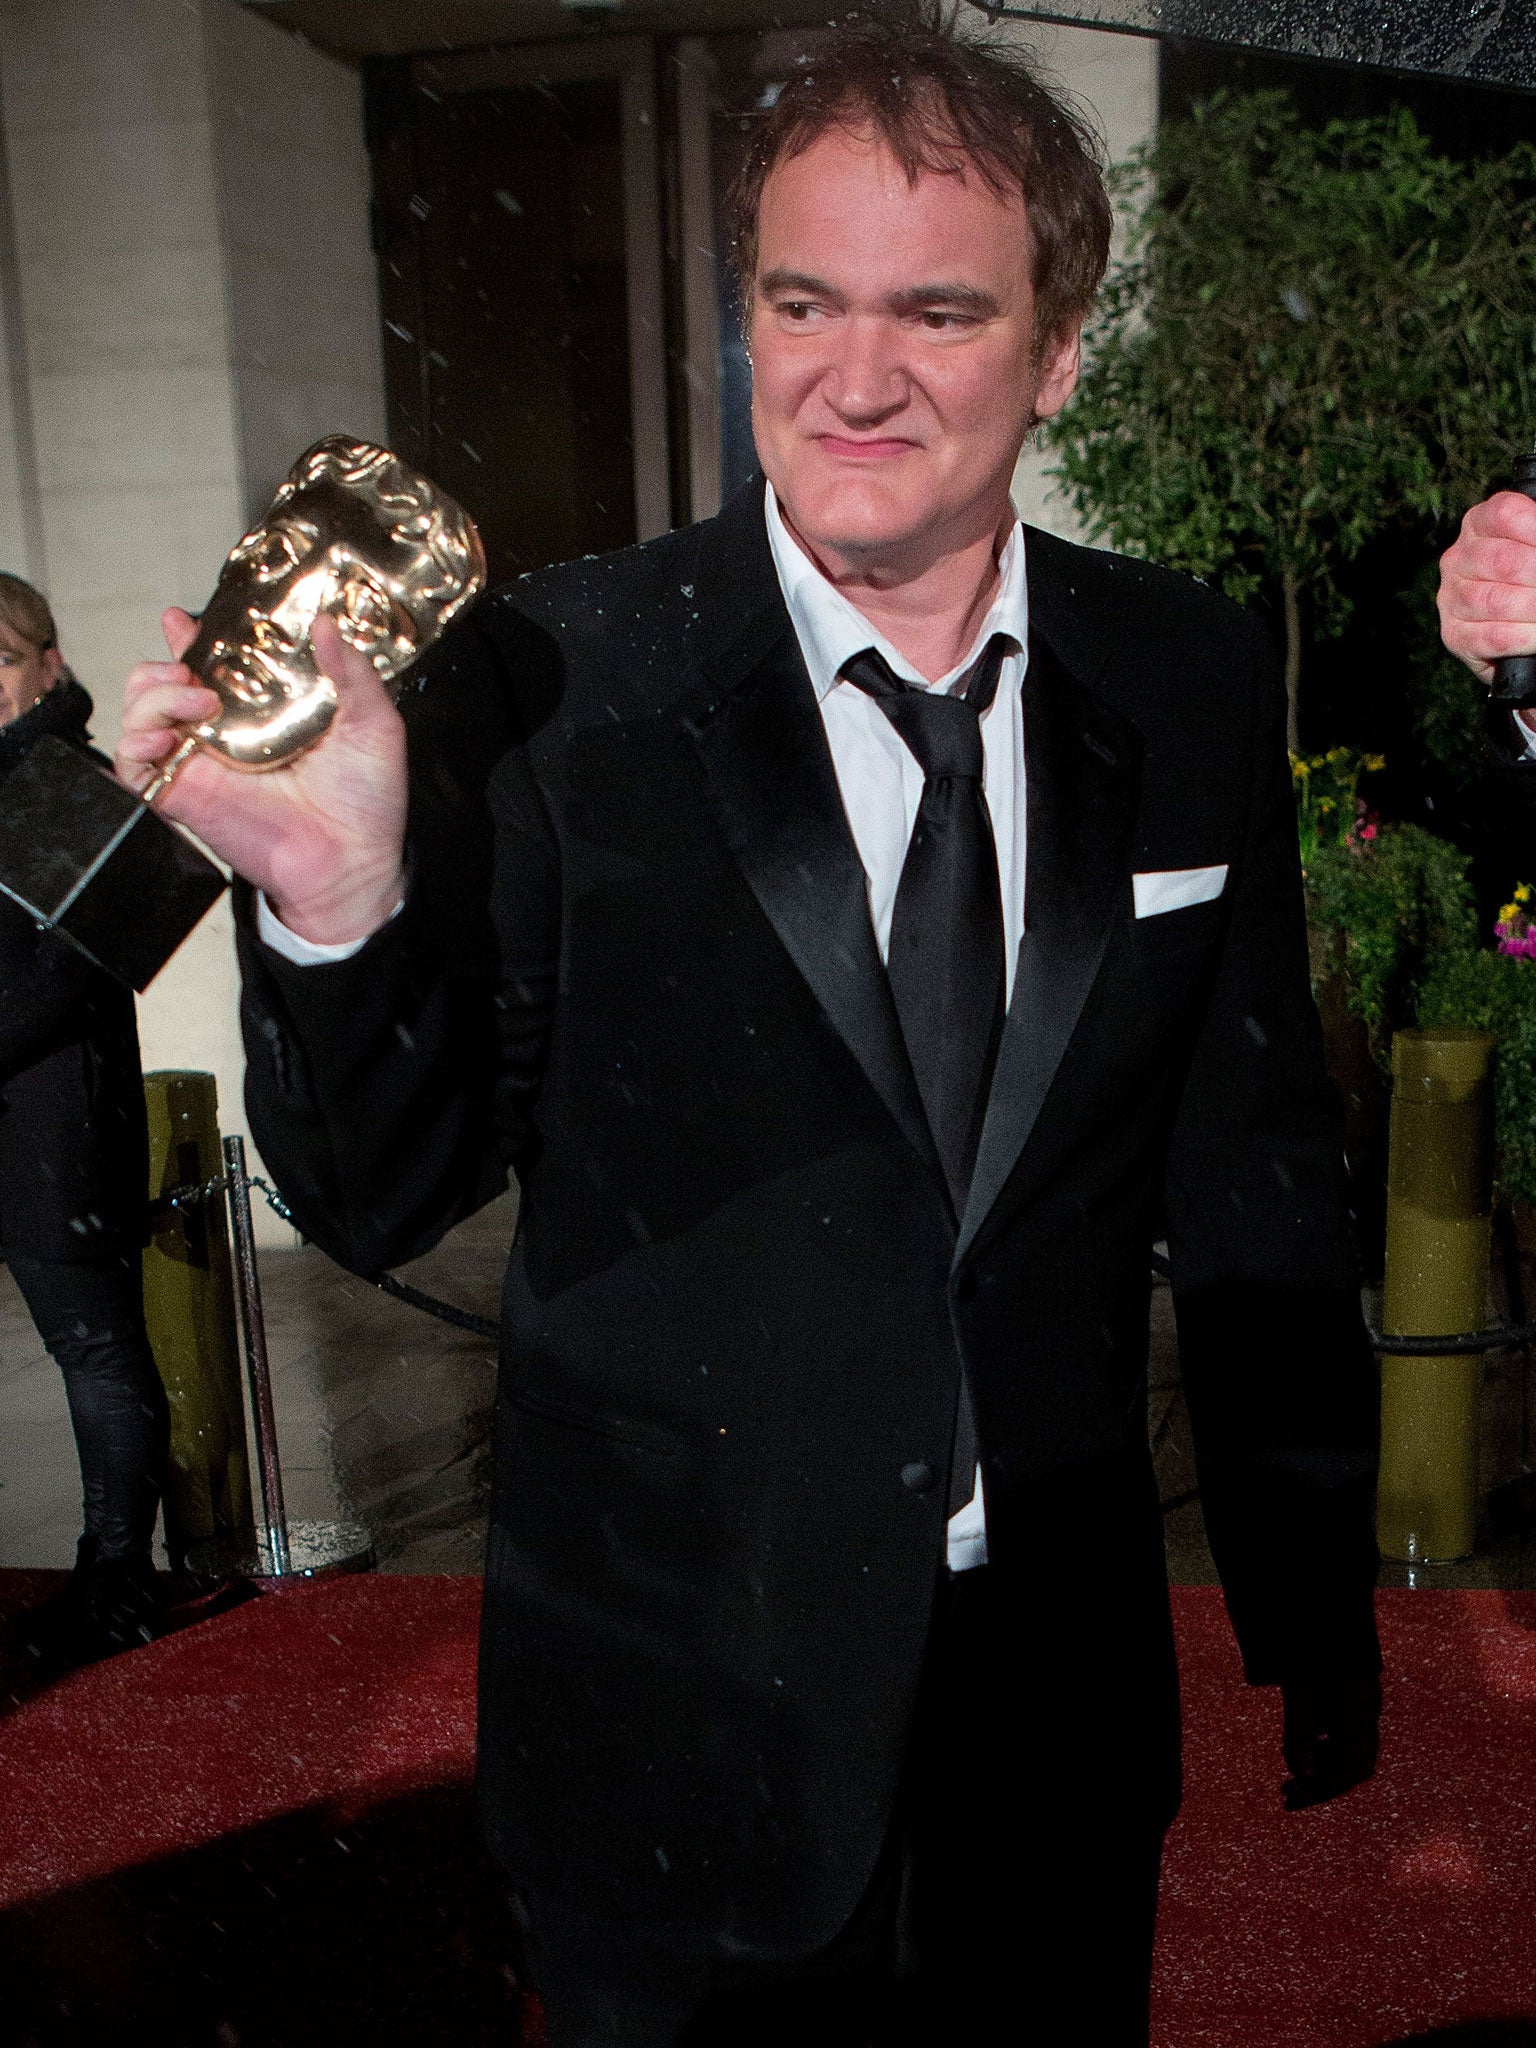 Quentin Tarantino won Best Original Screenplay for Django Unchained